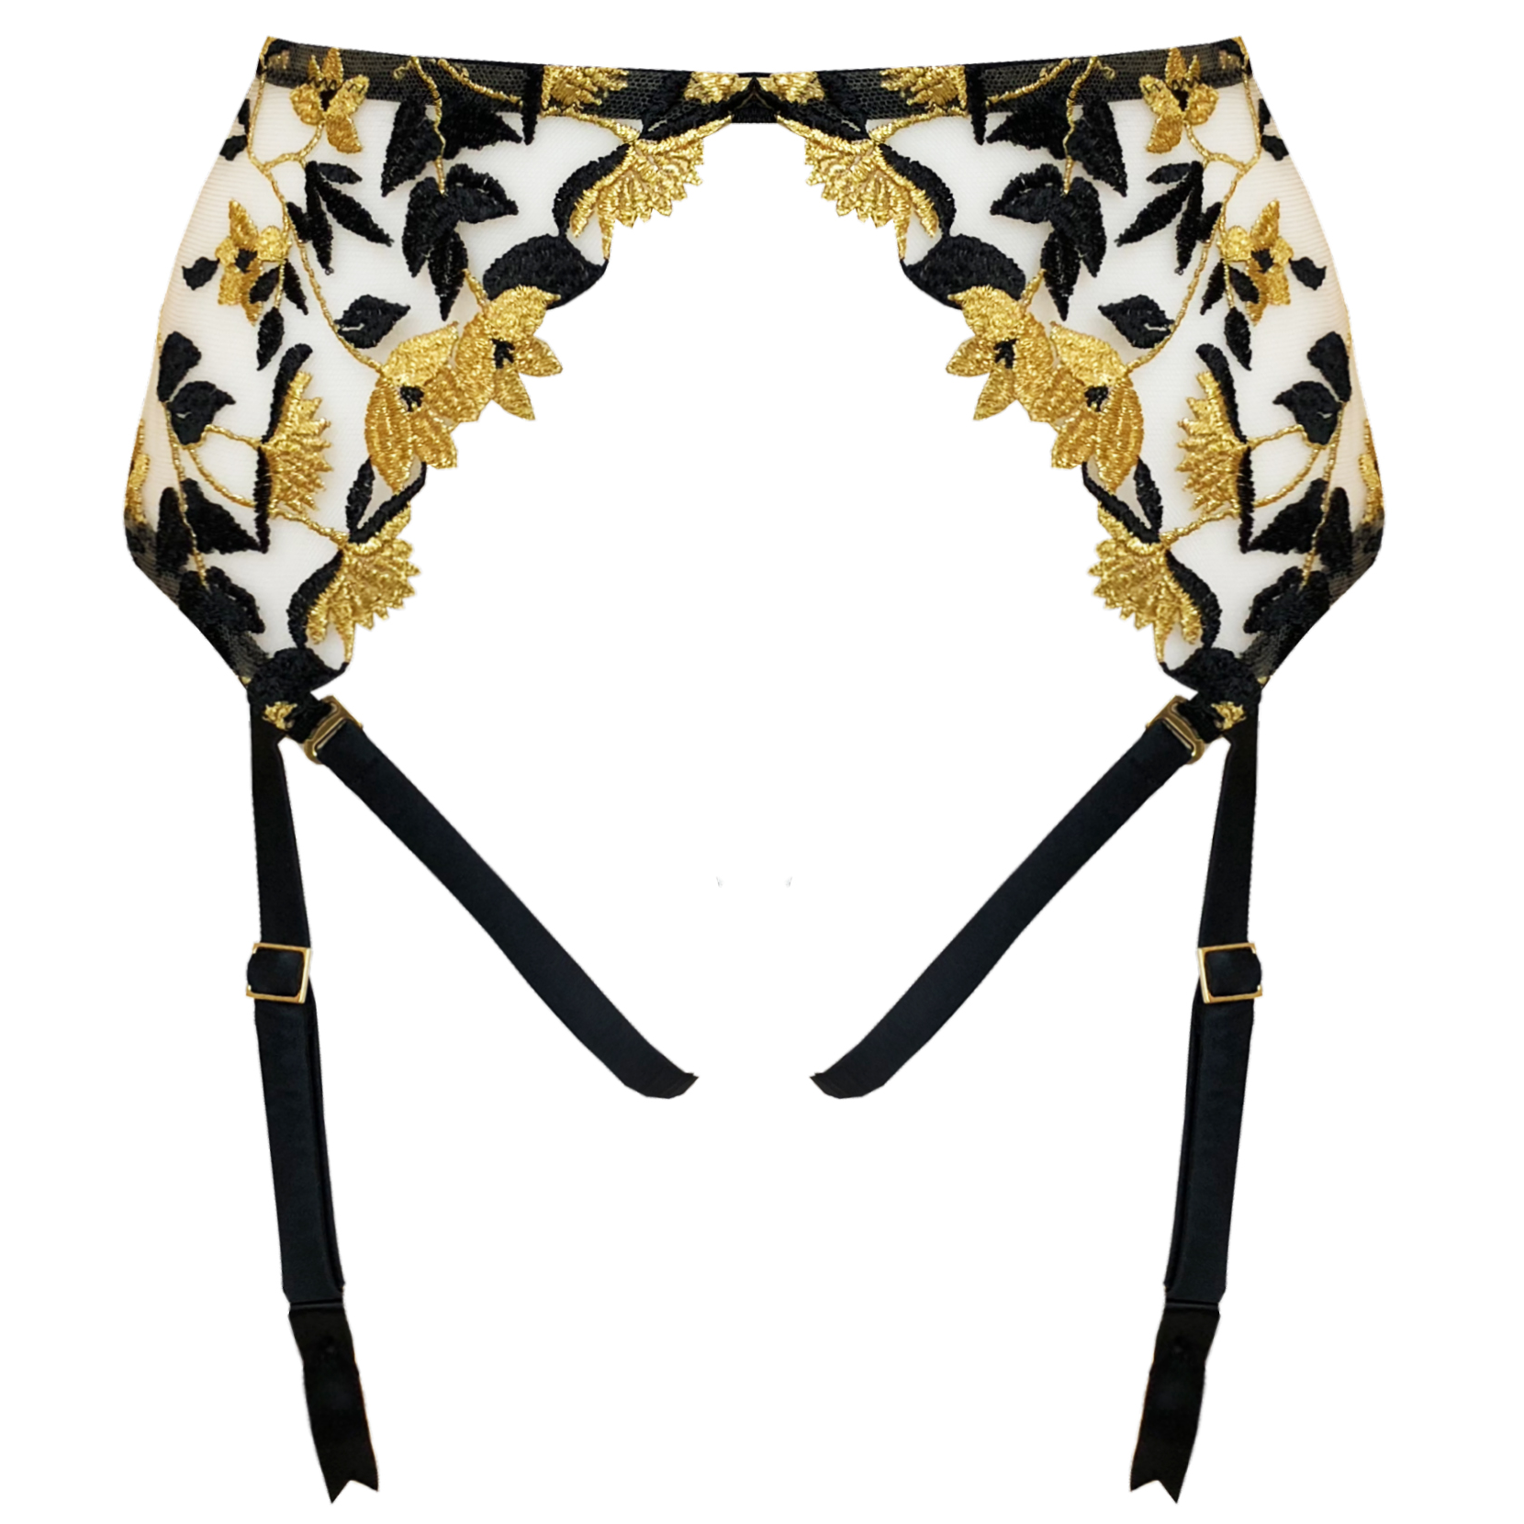 Studio Pia Soraya harness suspender with detachable leg straps black gold embroidery ouvert knicker